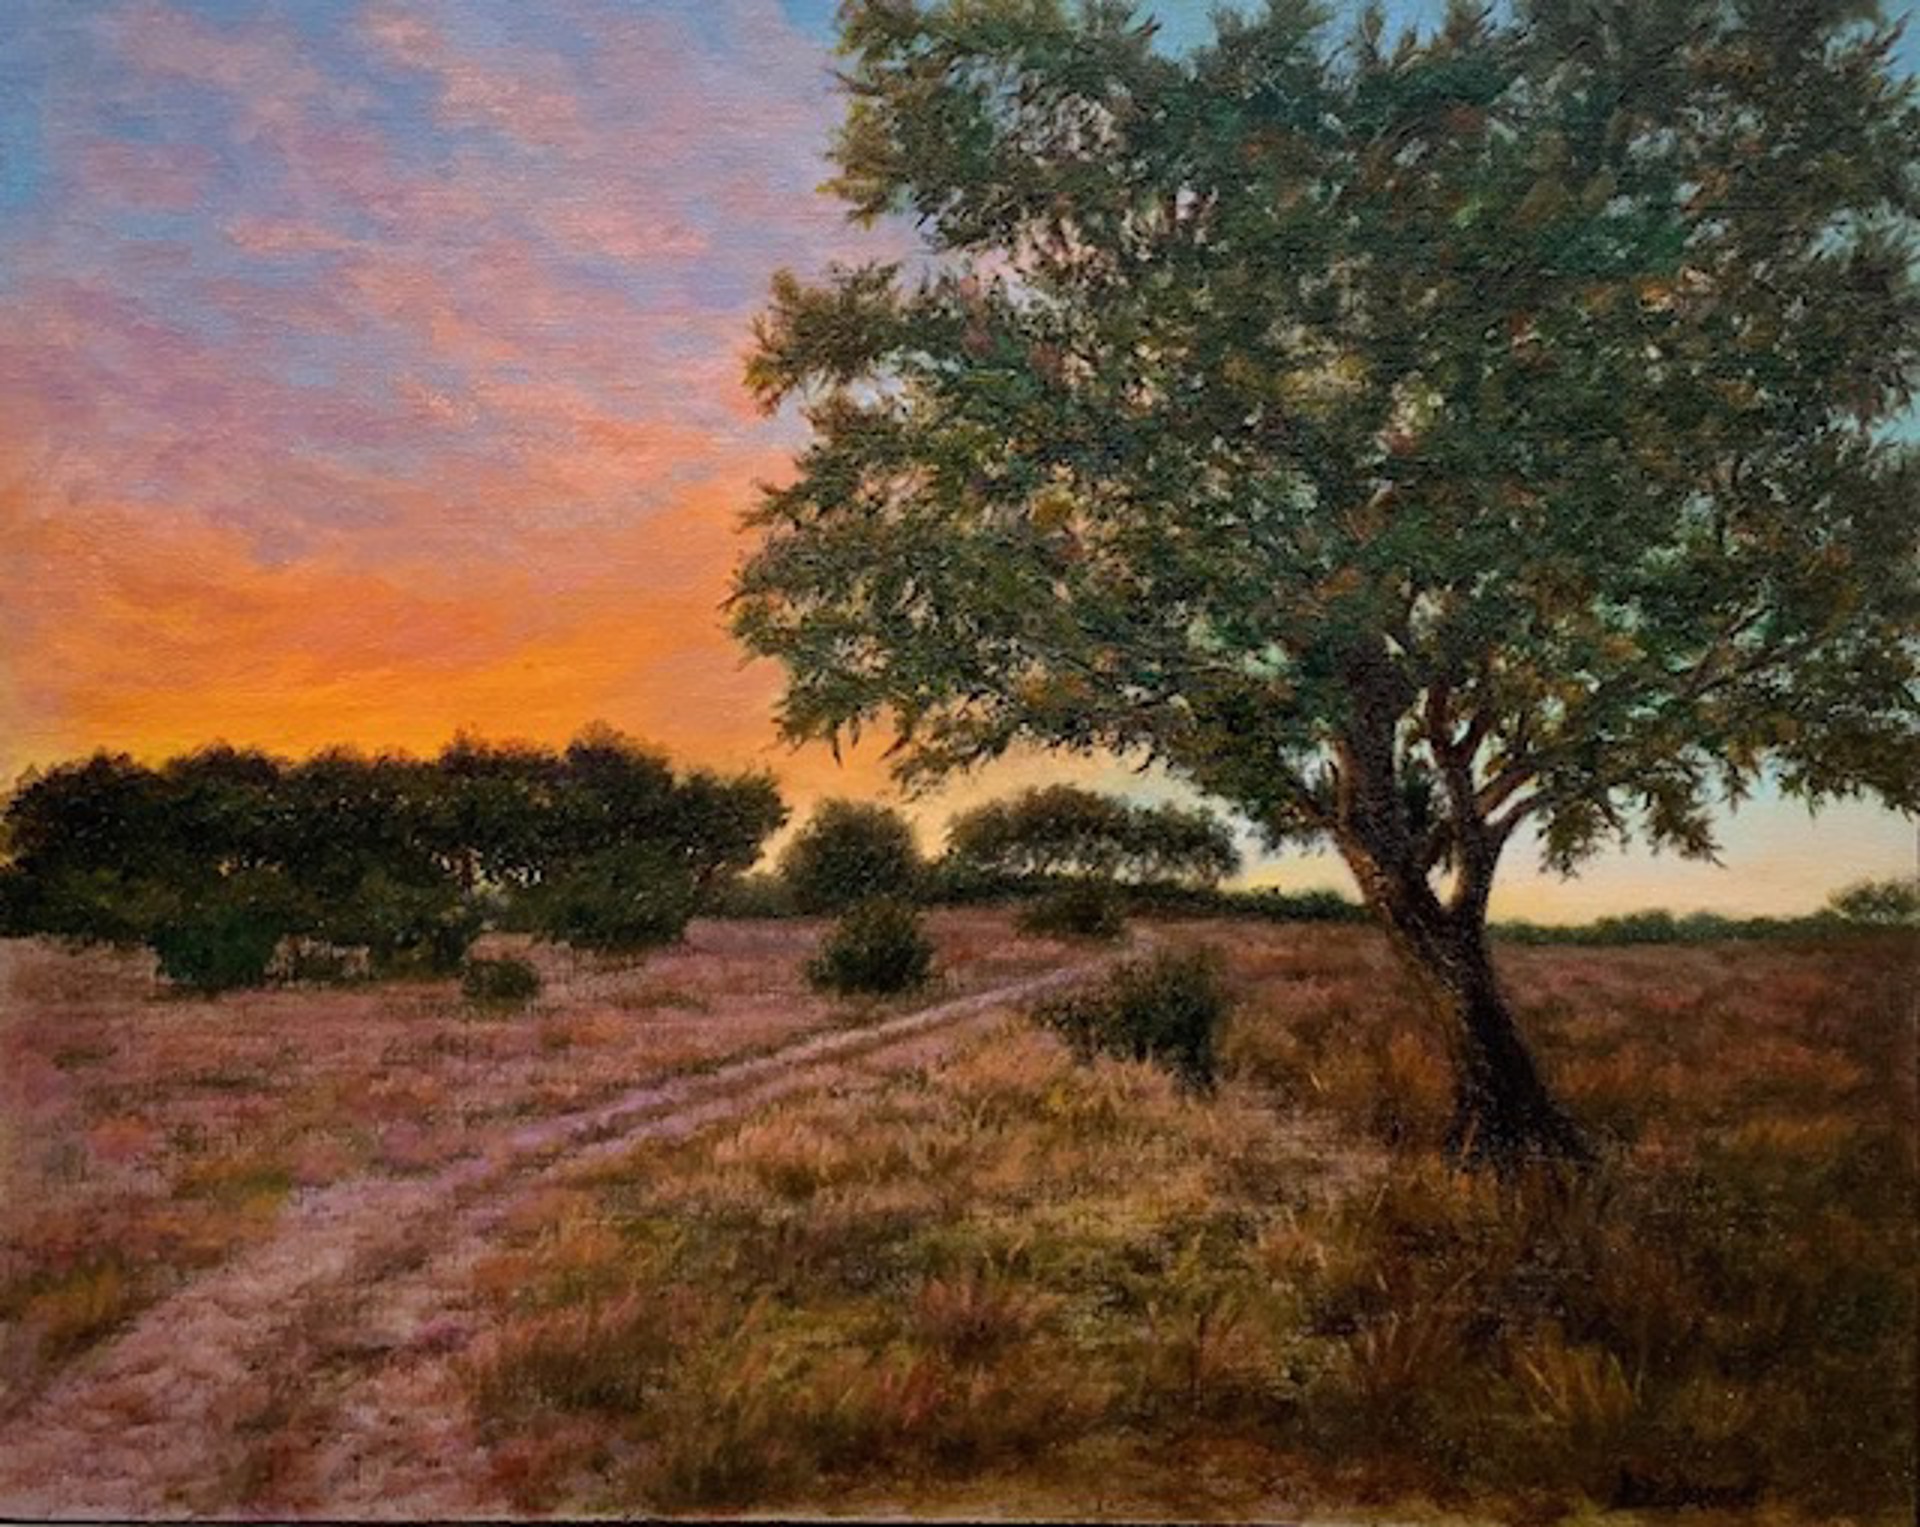 Sunrise at Carper's Creek Ranch by Betty Edmond